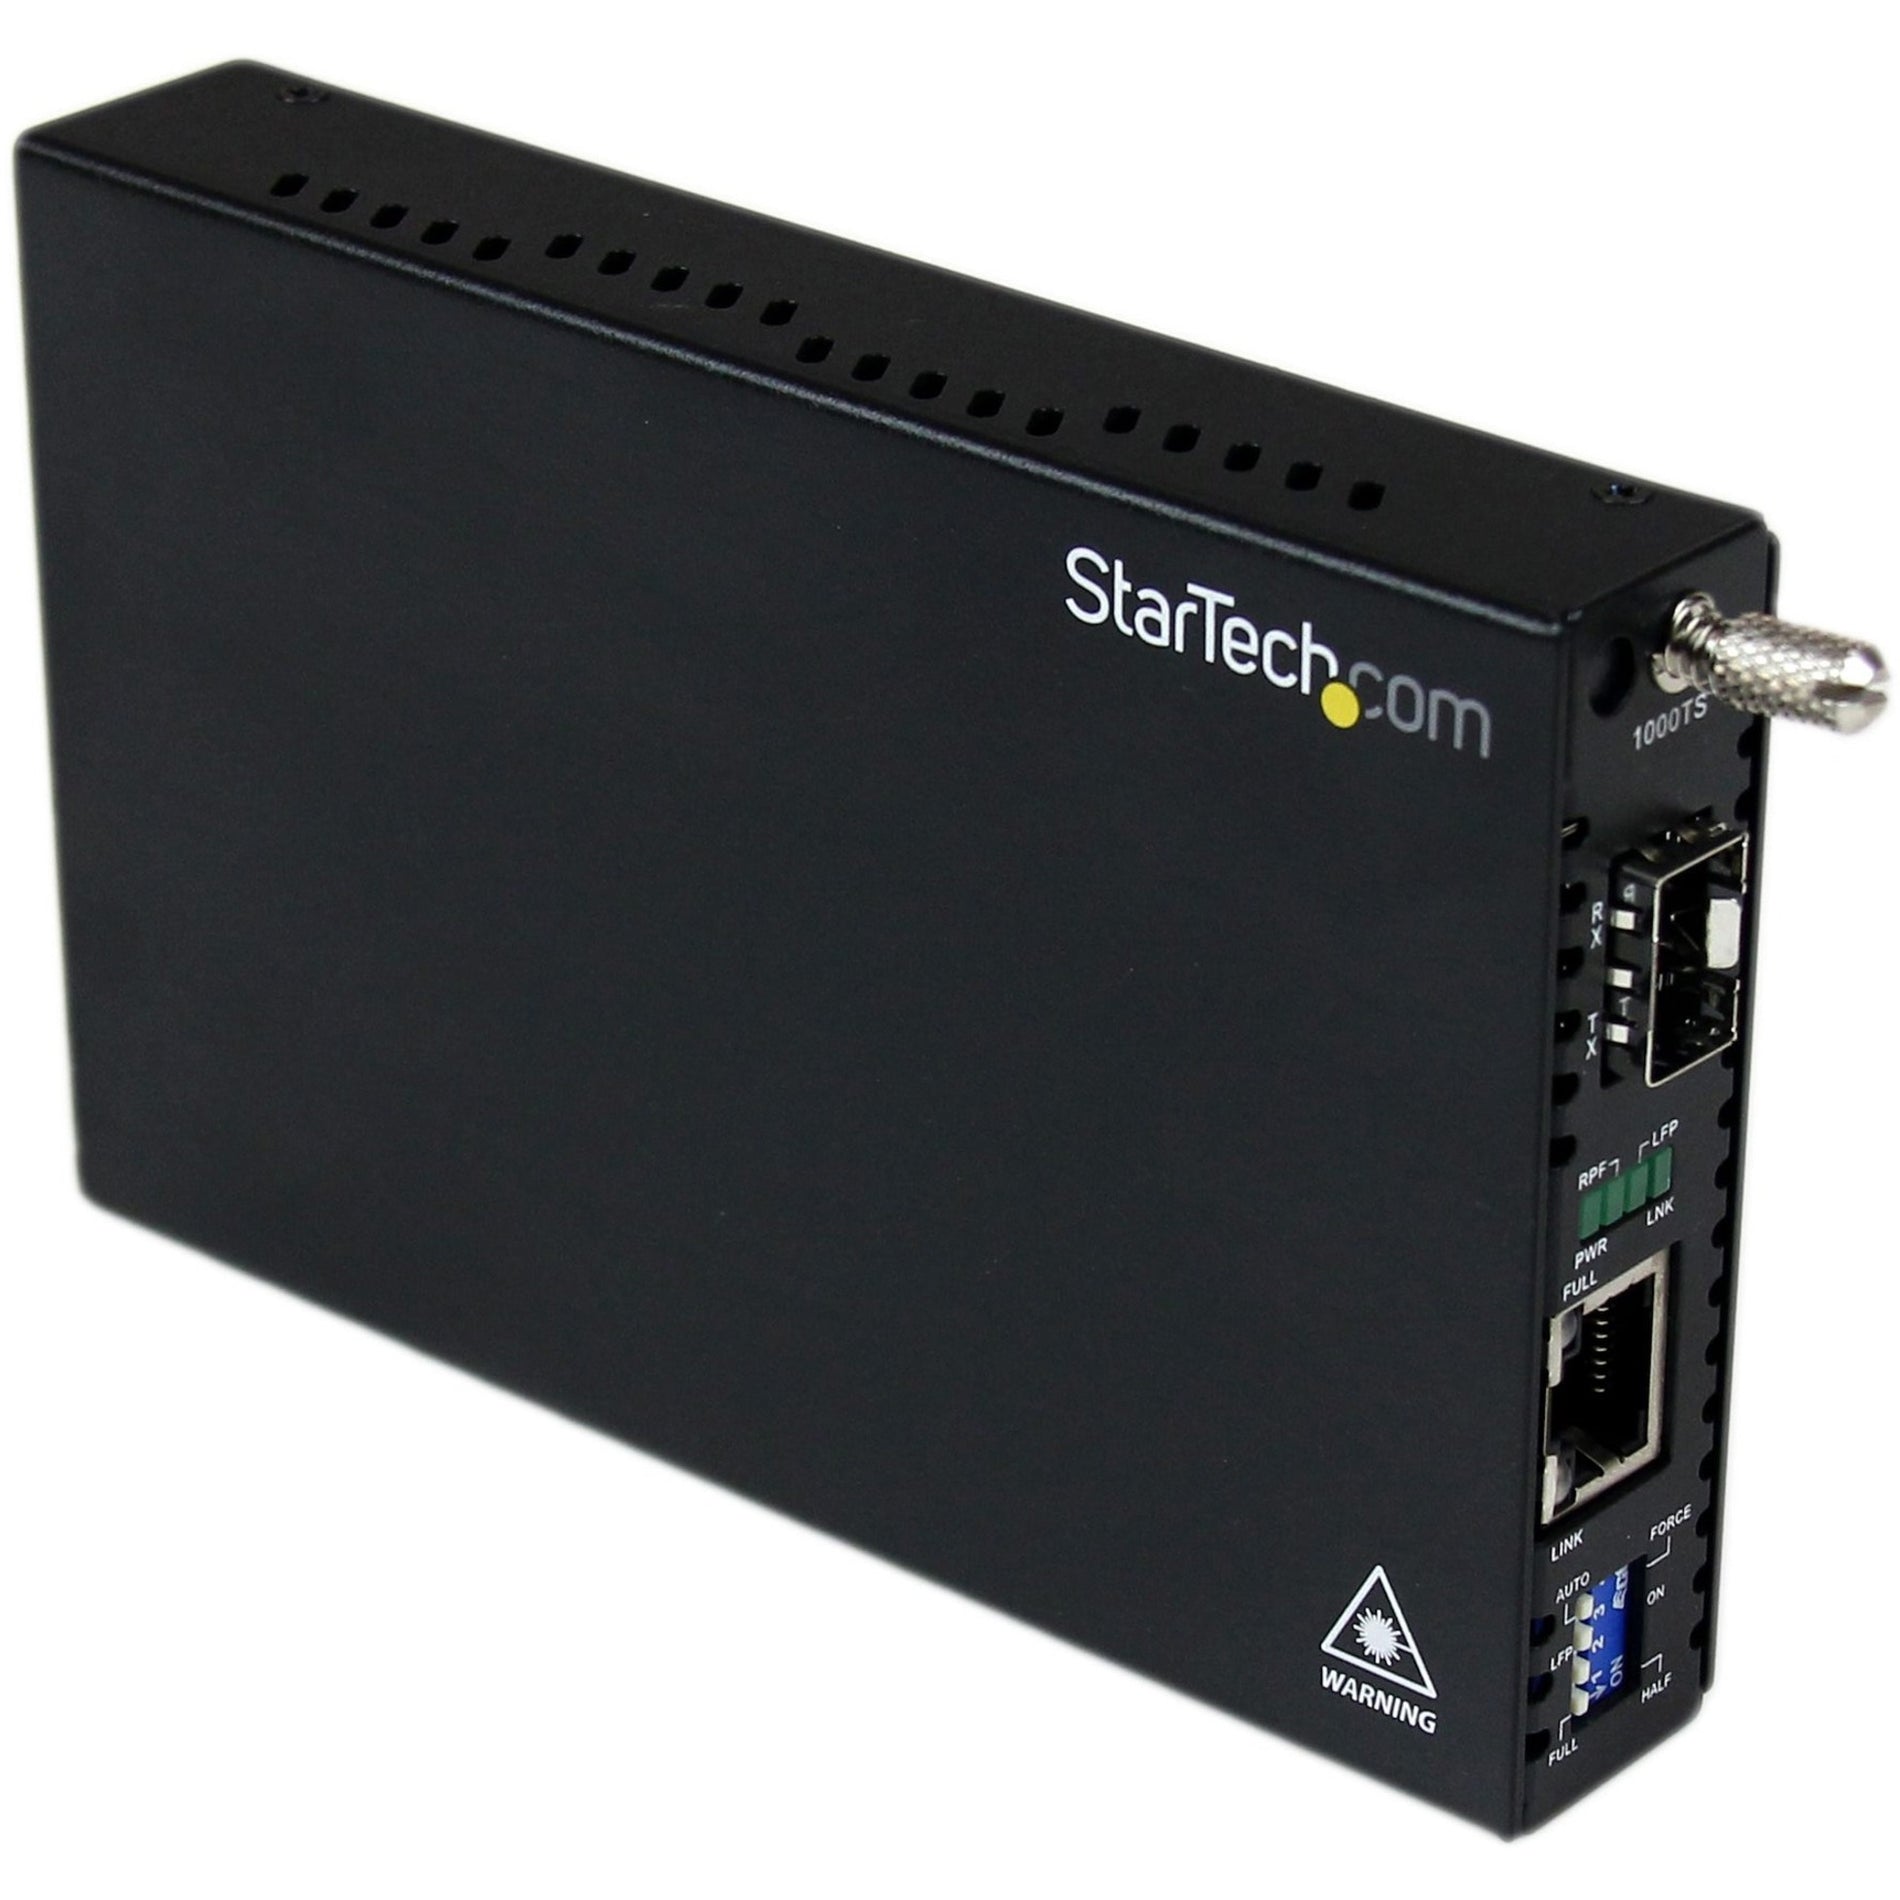 StarTech.com ET91000SFP2 Gigabit Ethernet Fiber Media Converter with Open SFP Slot, Reliable Network Connectivity for High-Speed Data Transfer